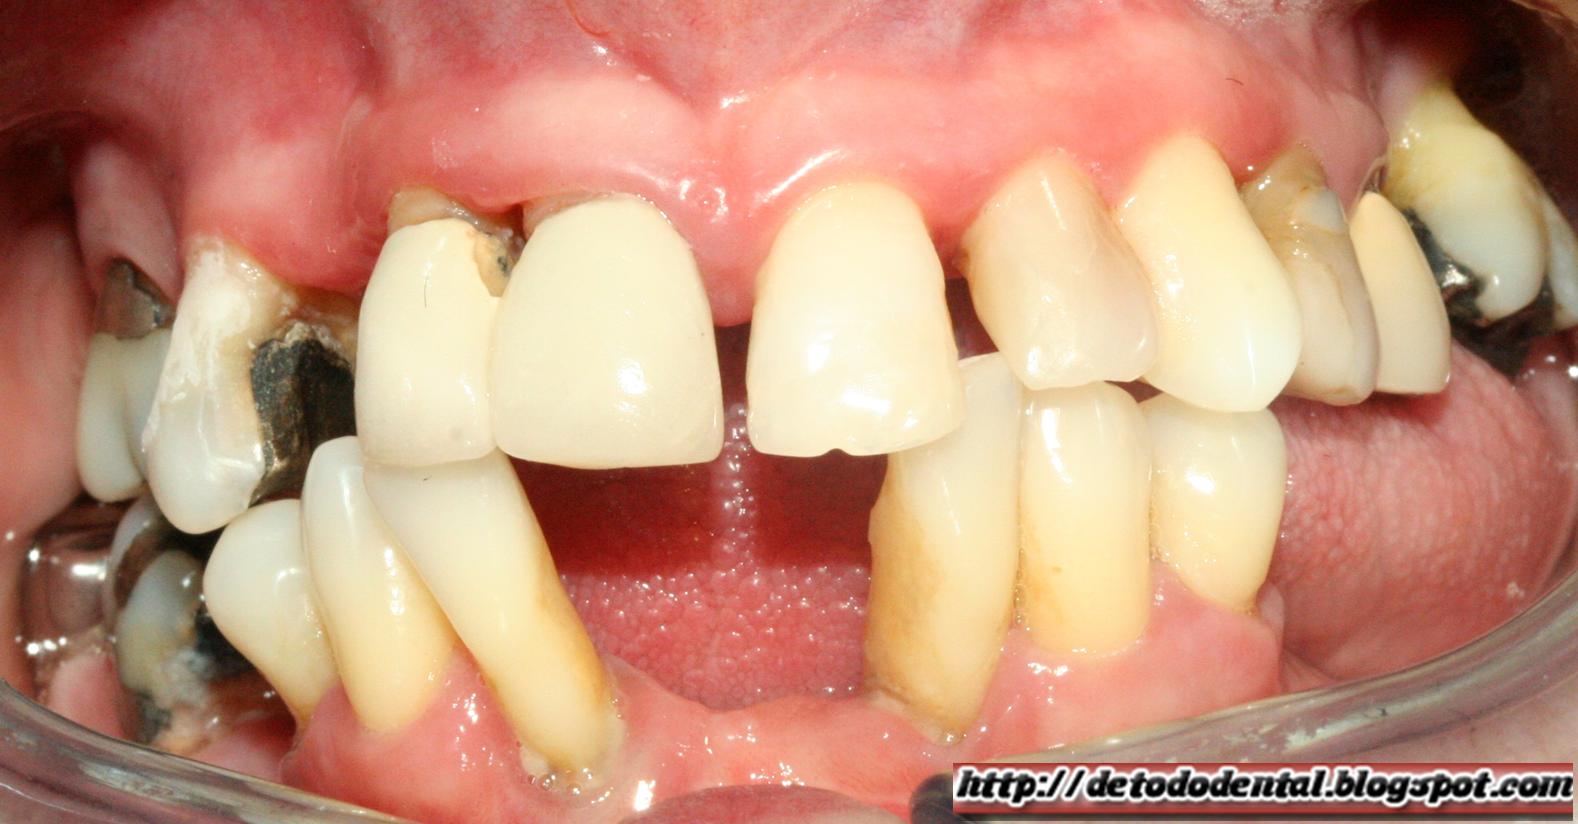 http://1.bp.blogspot.com/_RfhHjMj1Atg/TNwzh_GeiHI/AAAAAAAAATE/rFUkb6hvXCg/s1600/periodontitis.jpg